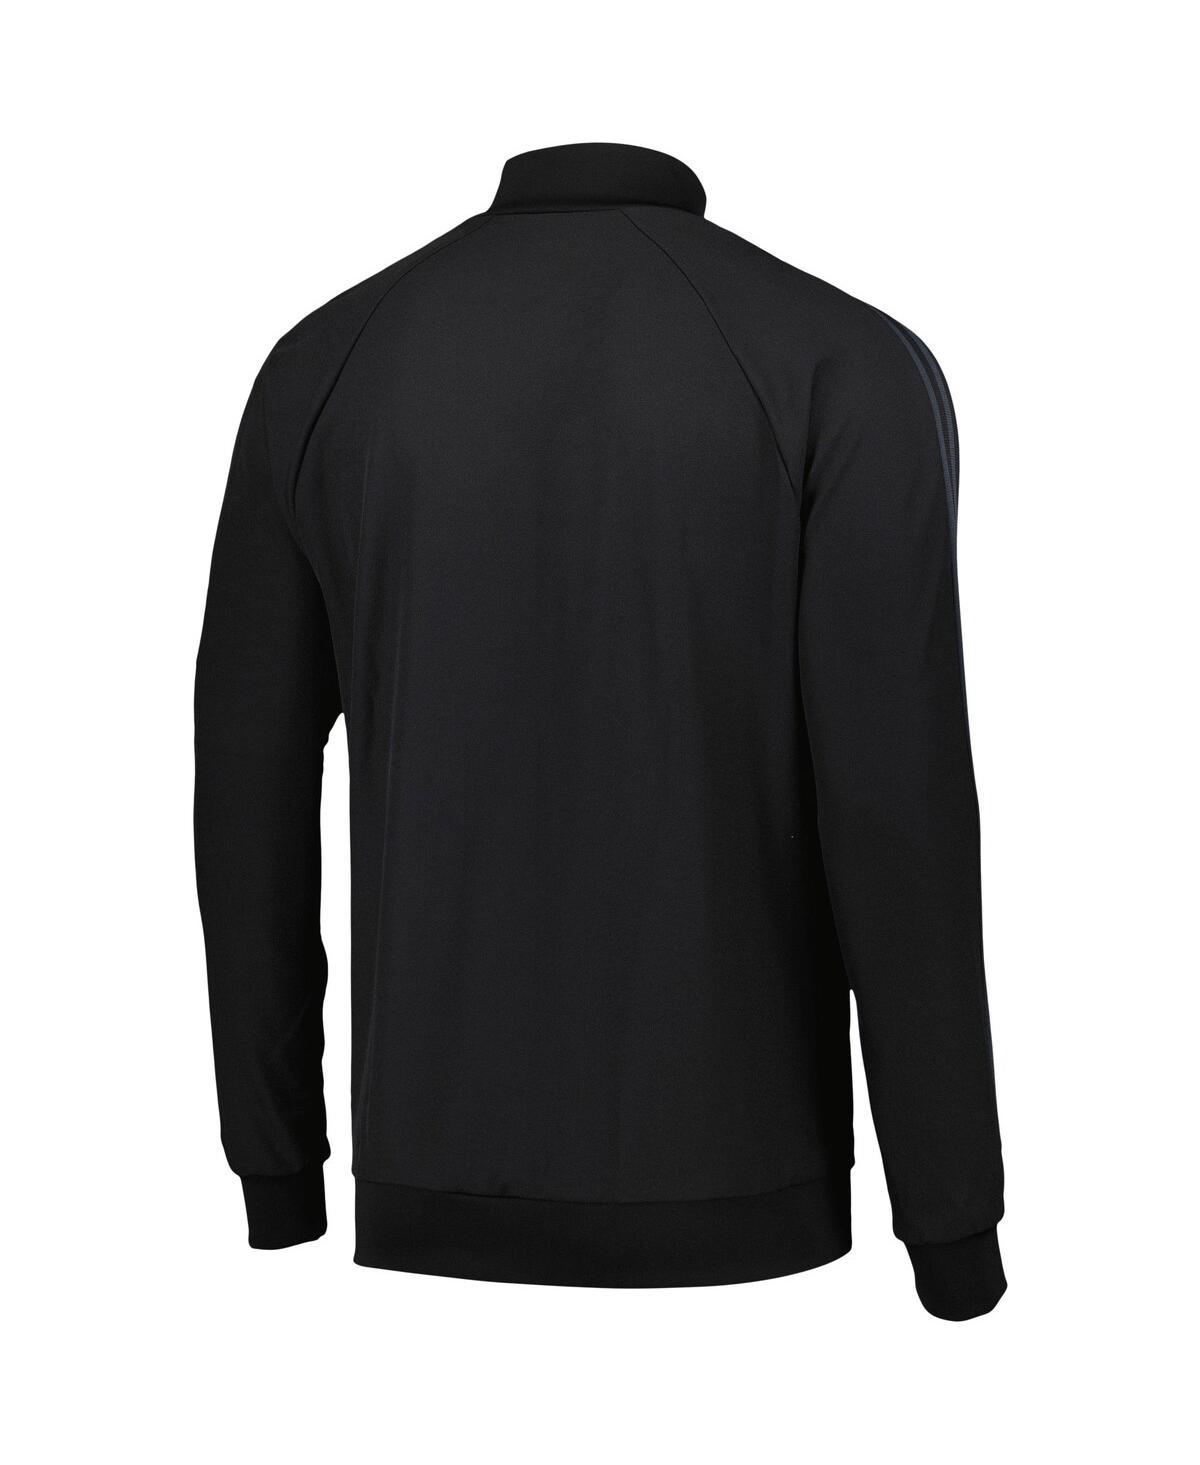 Shop Adidas Originals Men's Adidas Black Peter Saville X Manchester United Full-zip Track Jacket